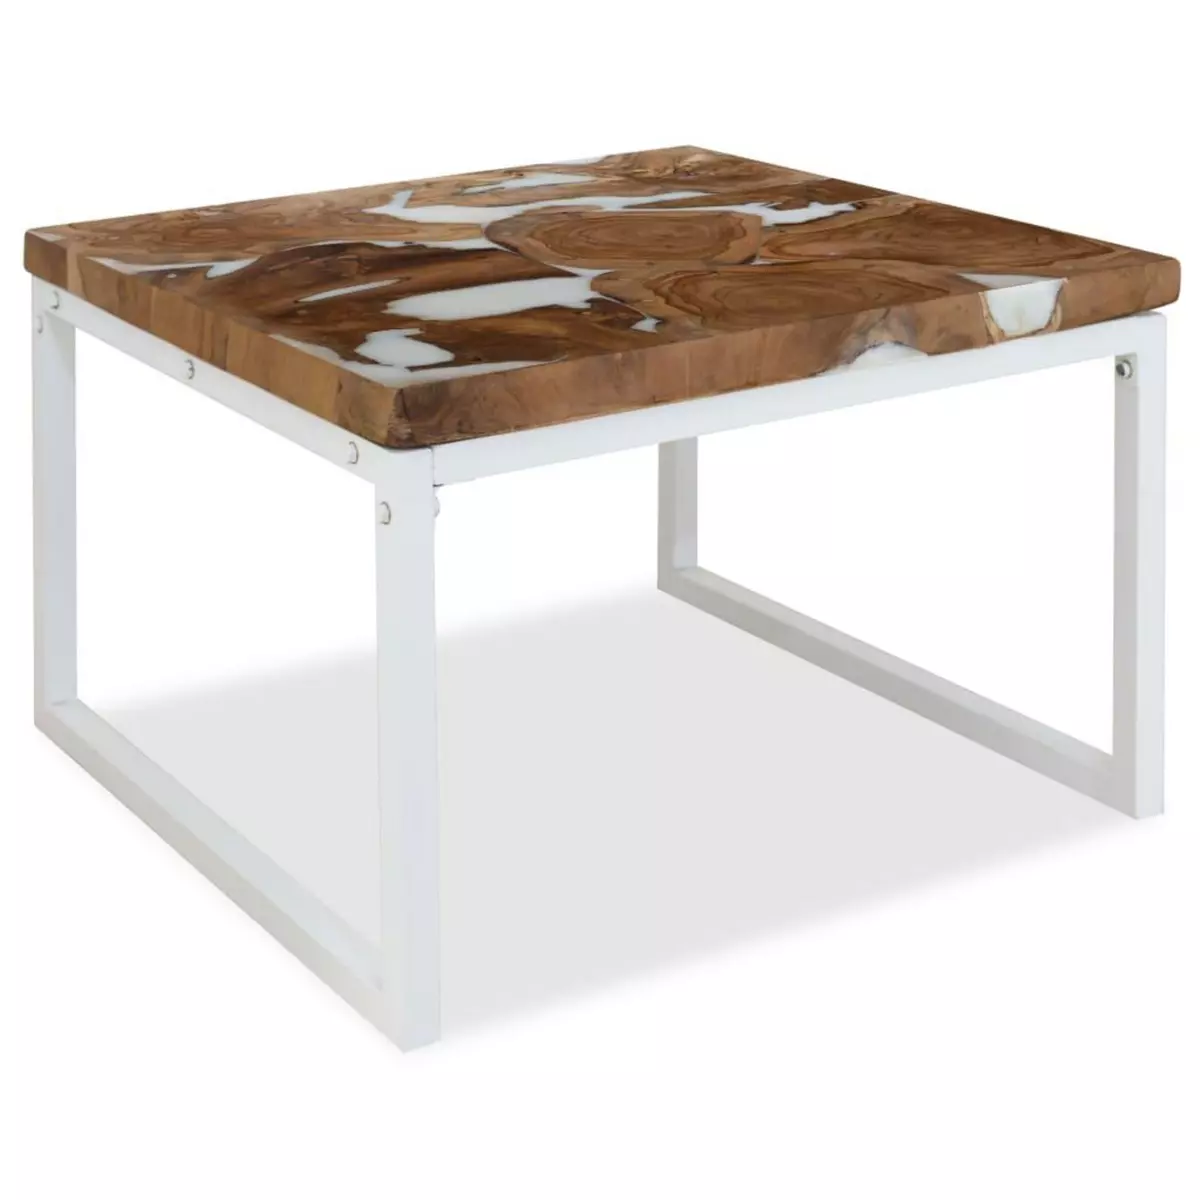 VIDAXL Table basse Teck Resine 60 x 60 x 40 cm